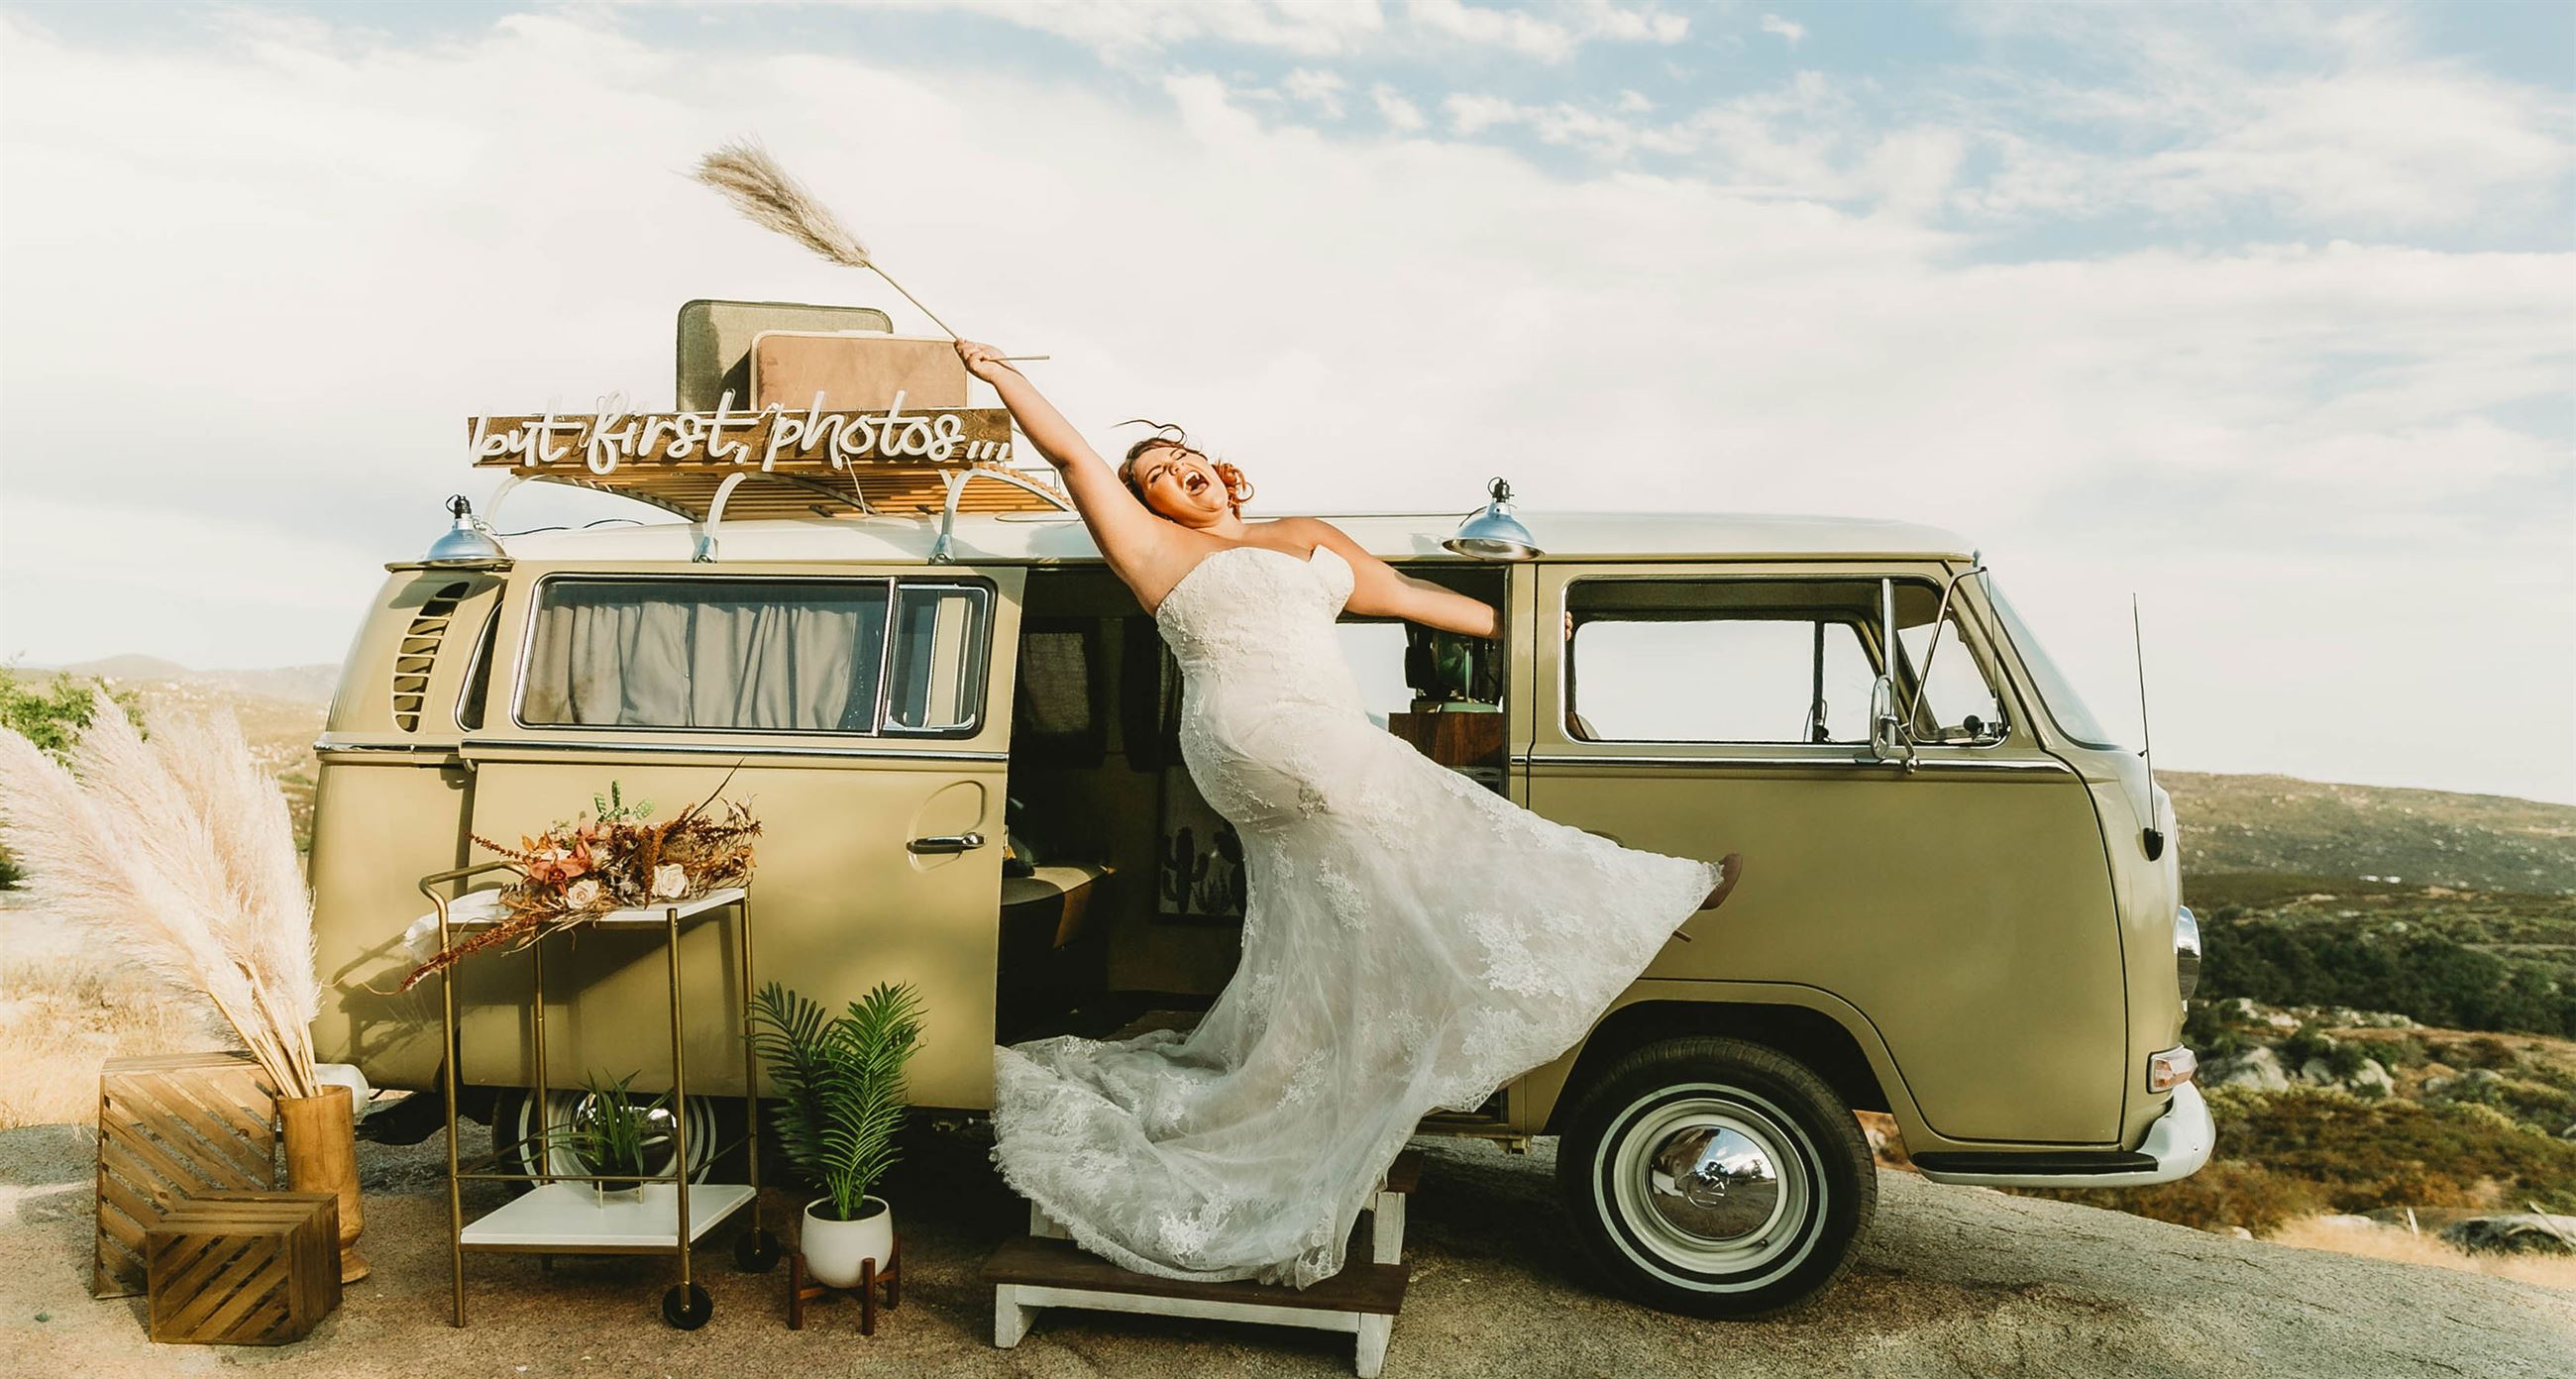 Plus Size Bride Wearing A Wedding Dress On Top Of A Van. Desktop Image.